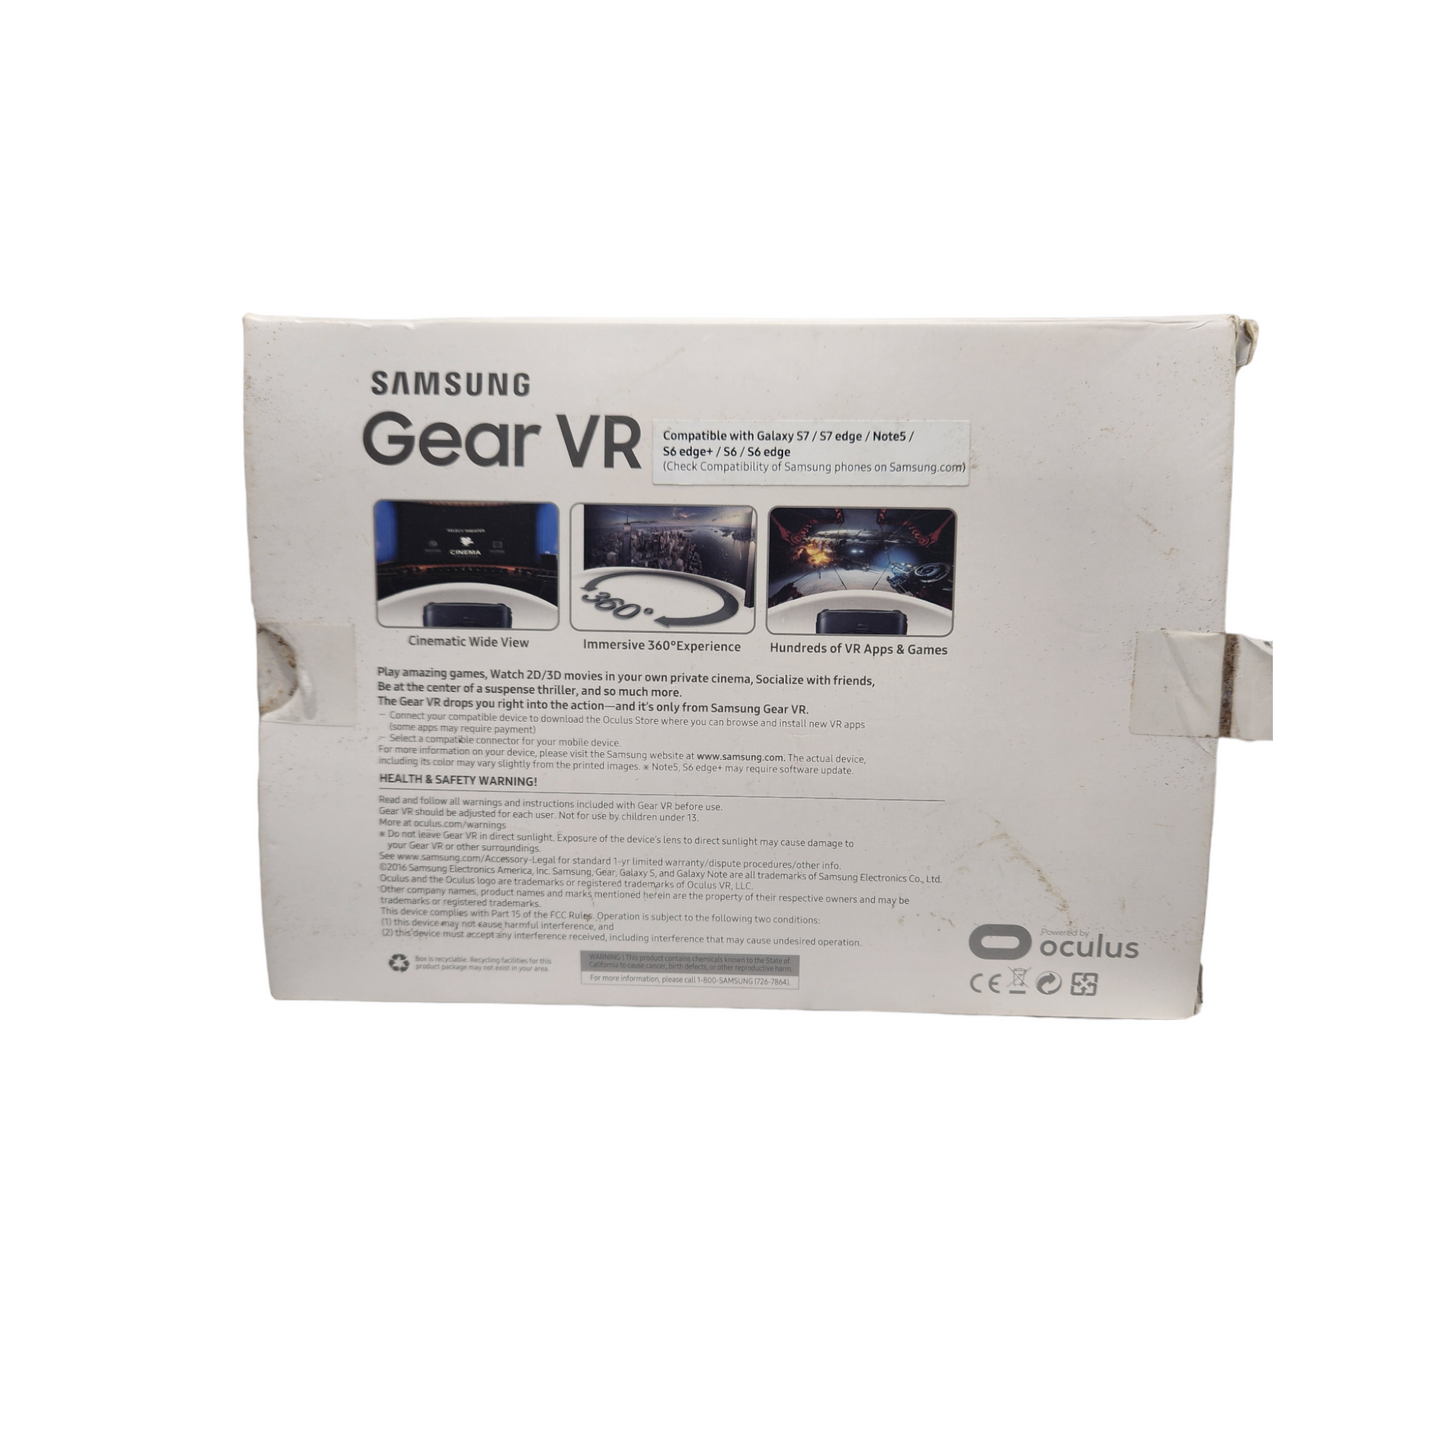 New in Box Samsung Gear VR Oculus